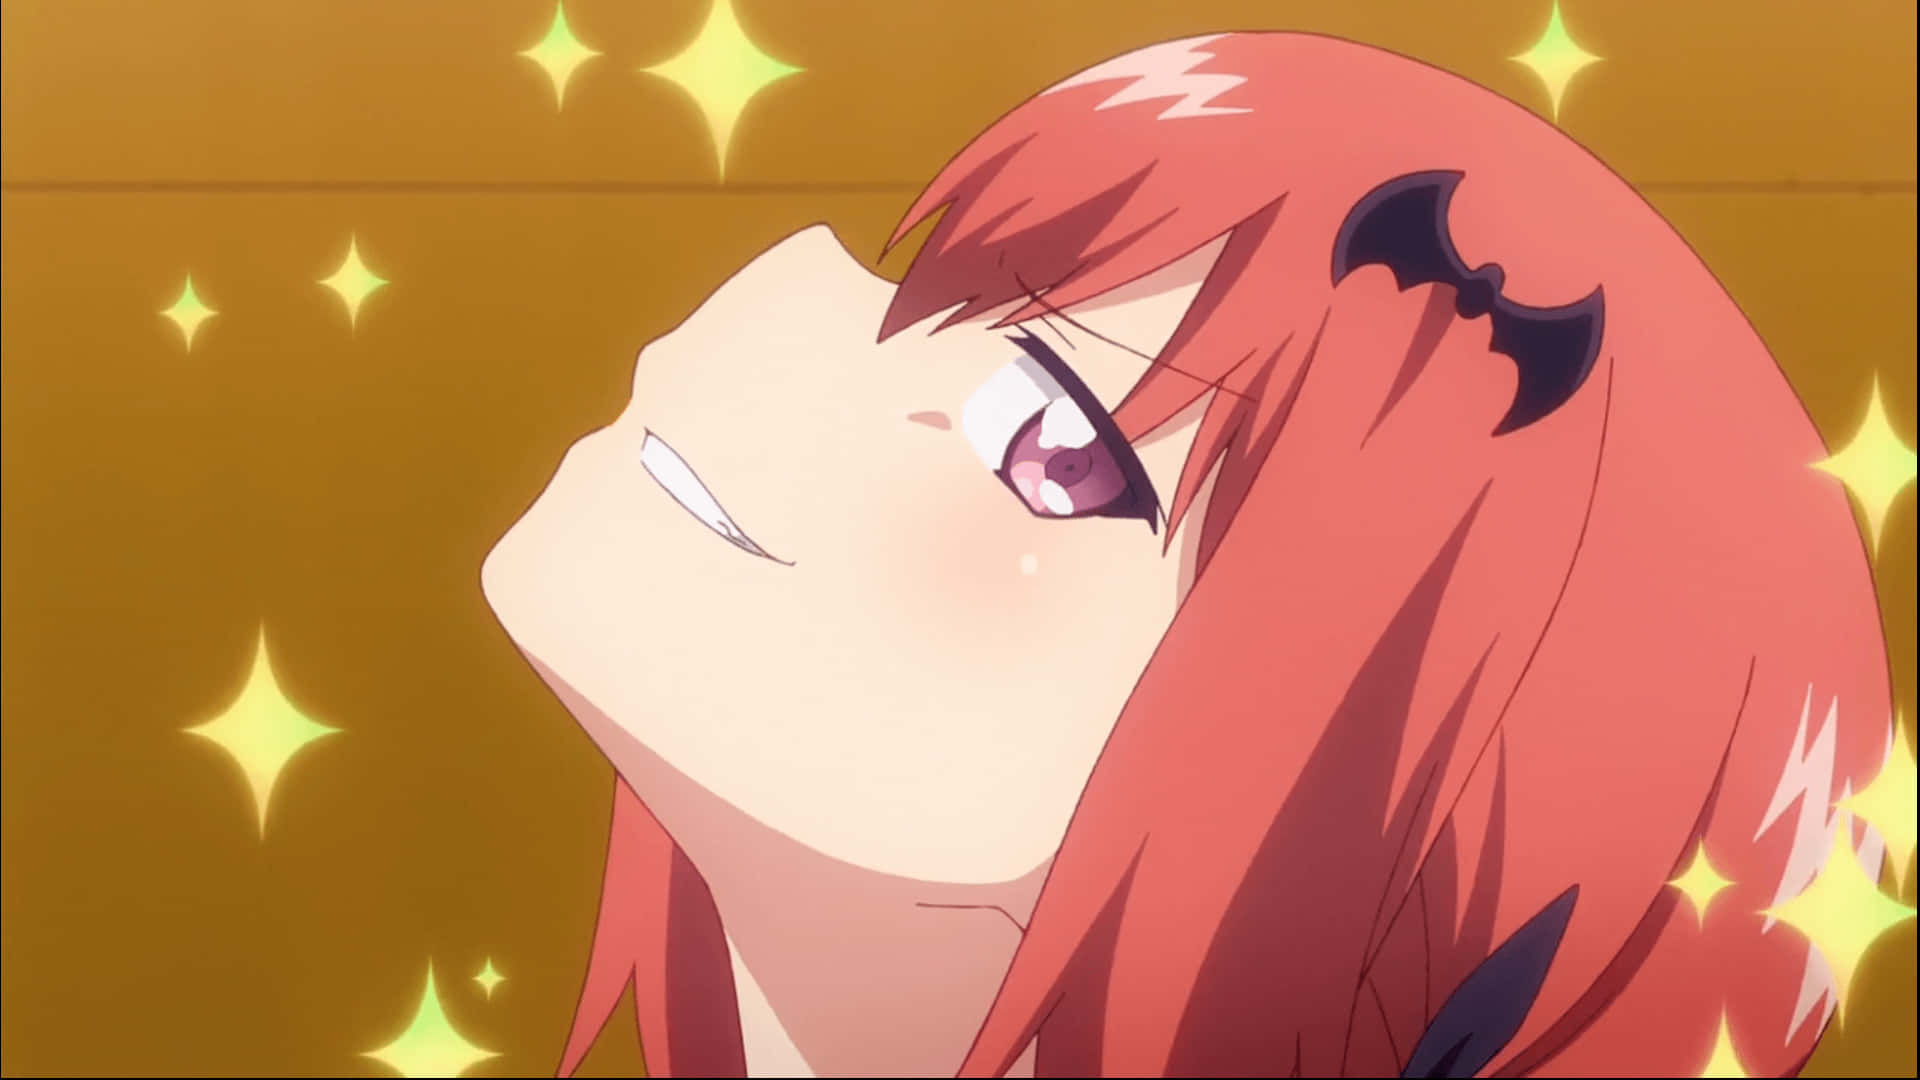 Smug Face Of The Beautiful Anime Wallpaper